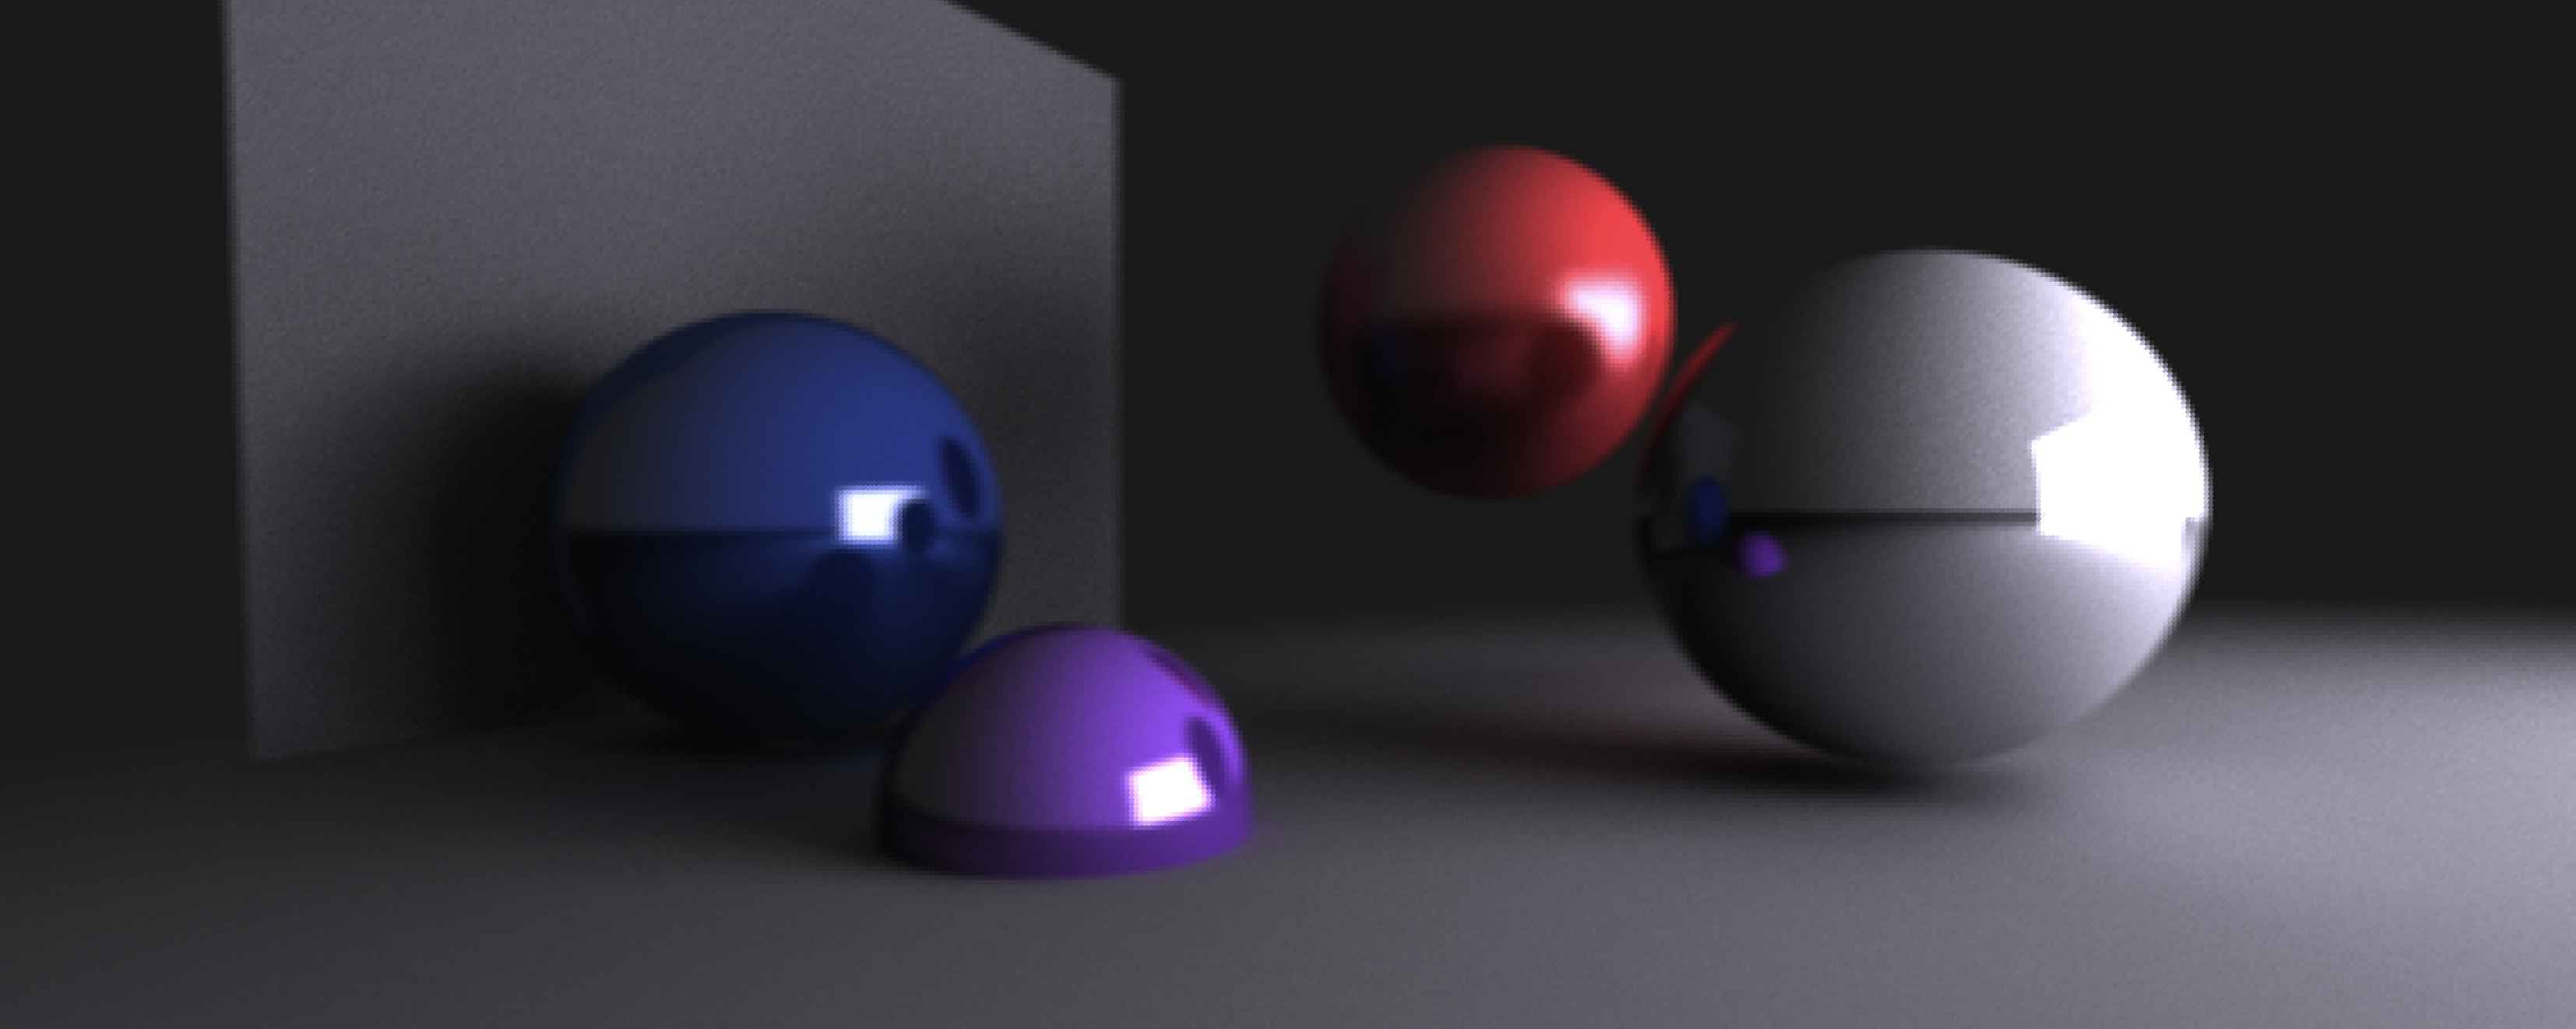 cgi image with spheres